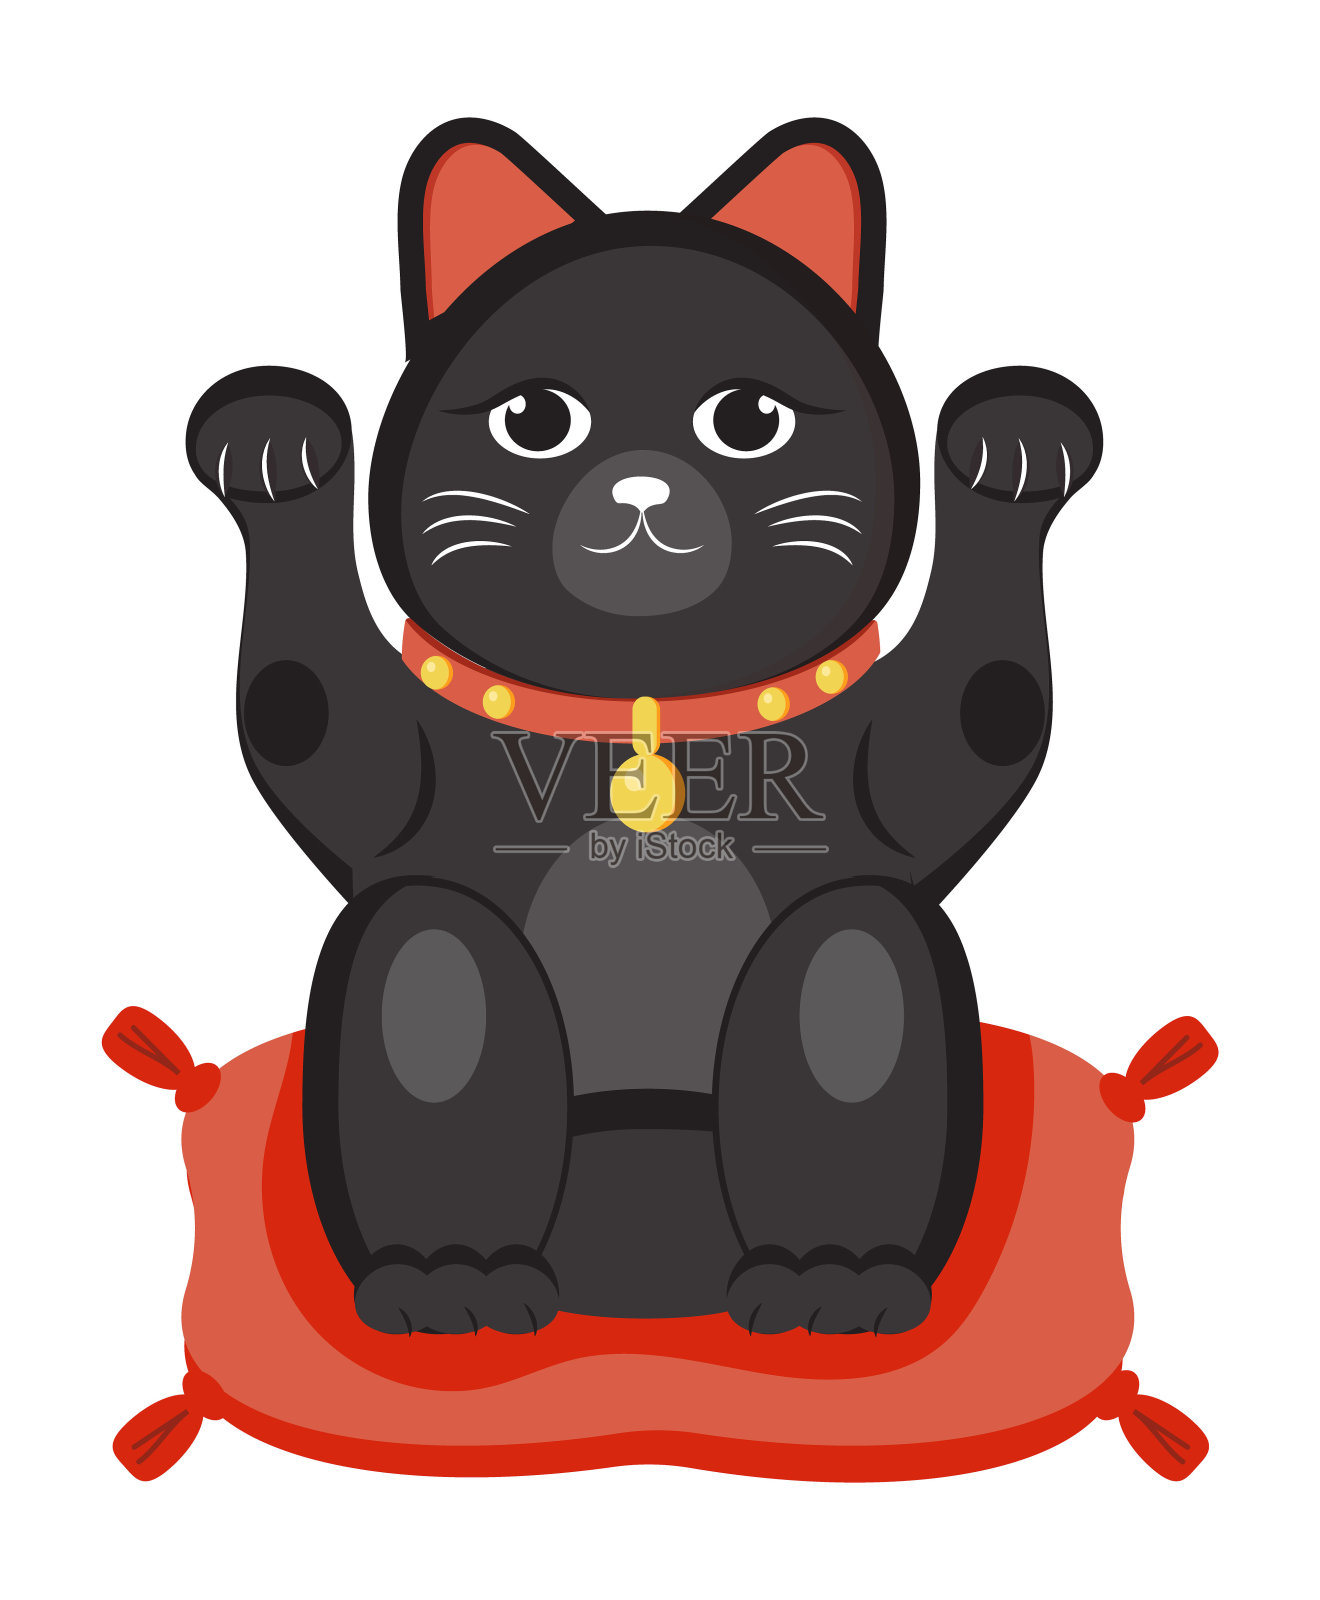 Maneki neko向量。日本传统文化中的幸运猫。护身符或吉祥物的象征插画图片素材